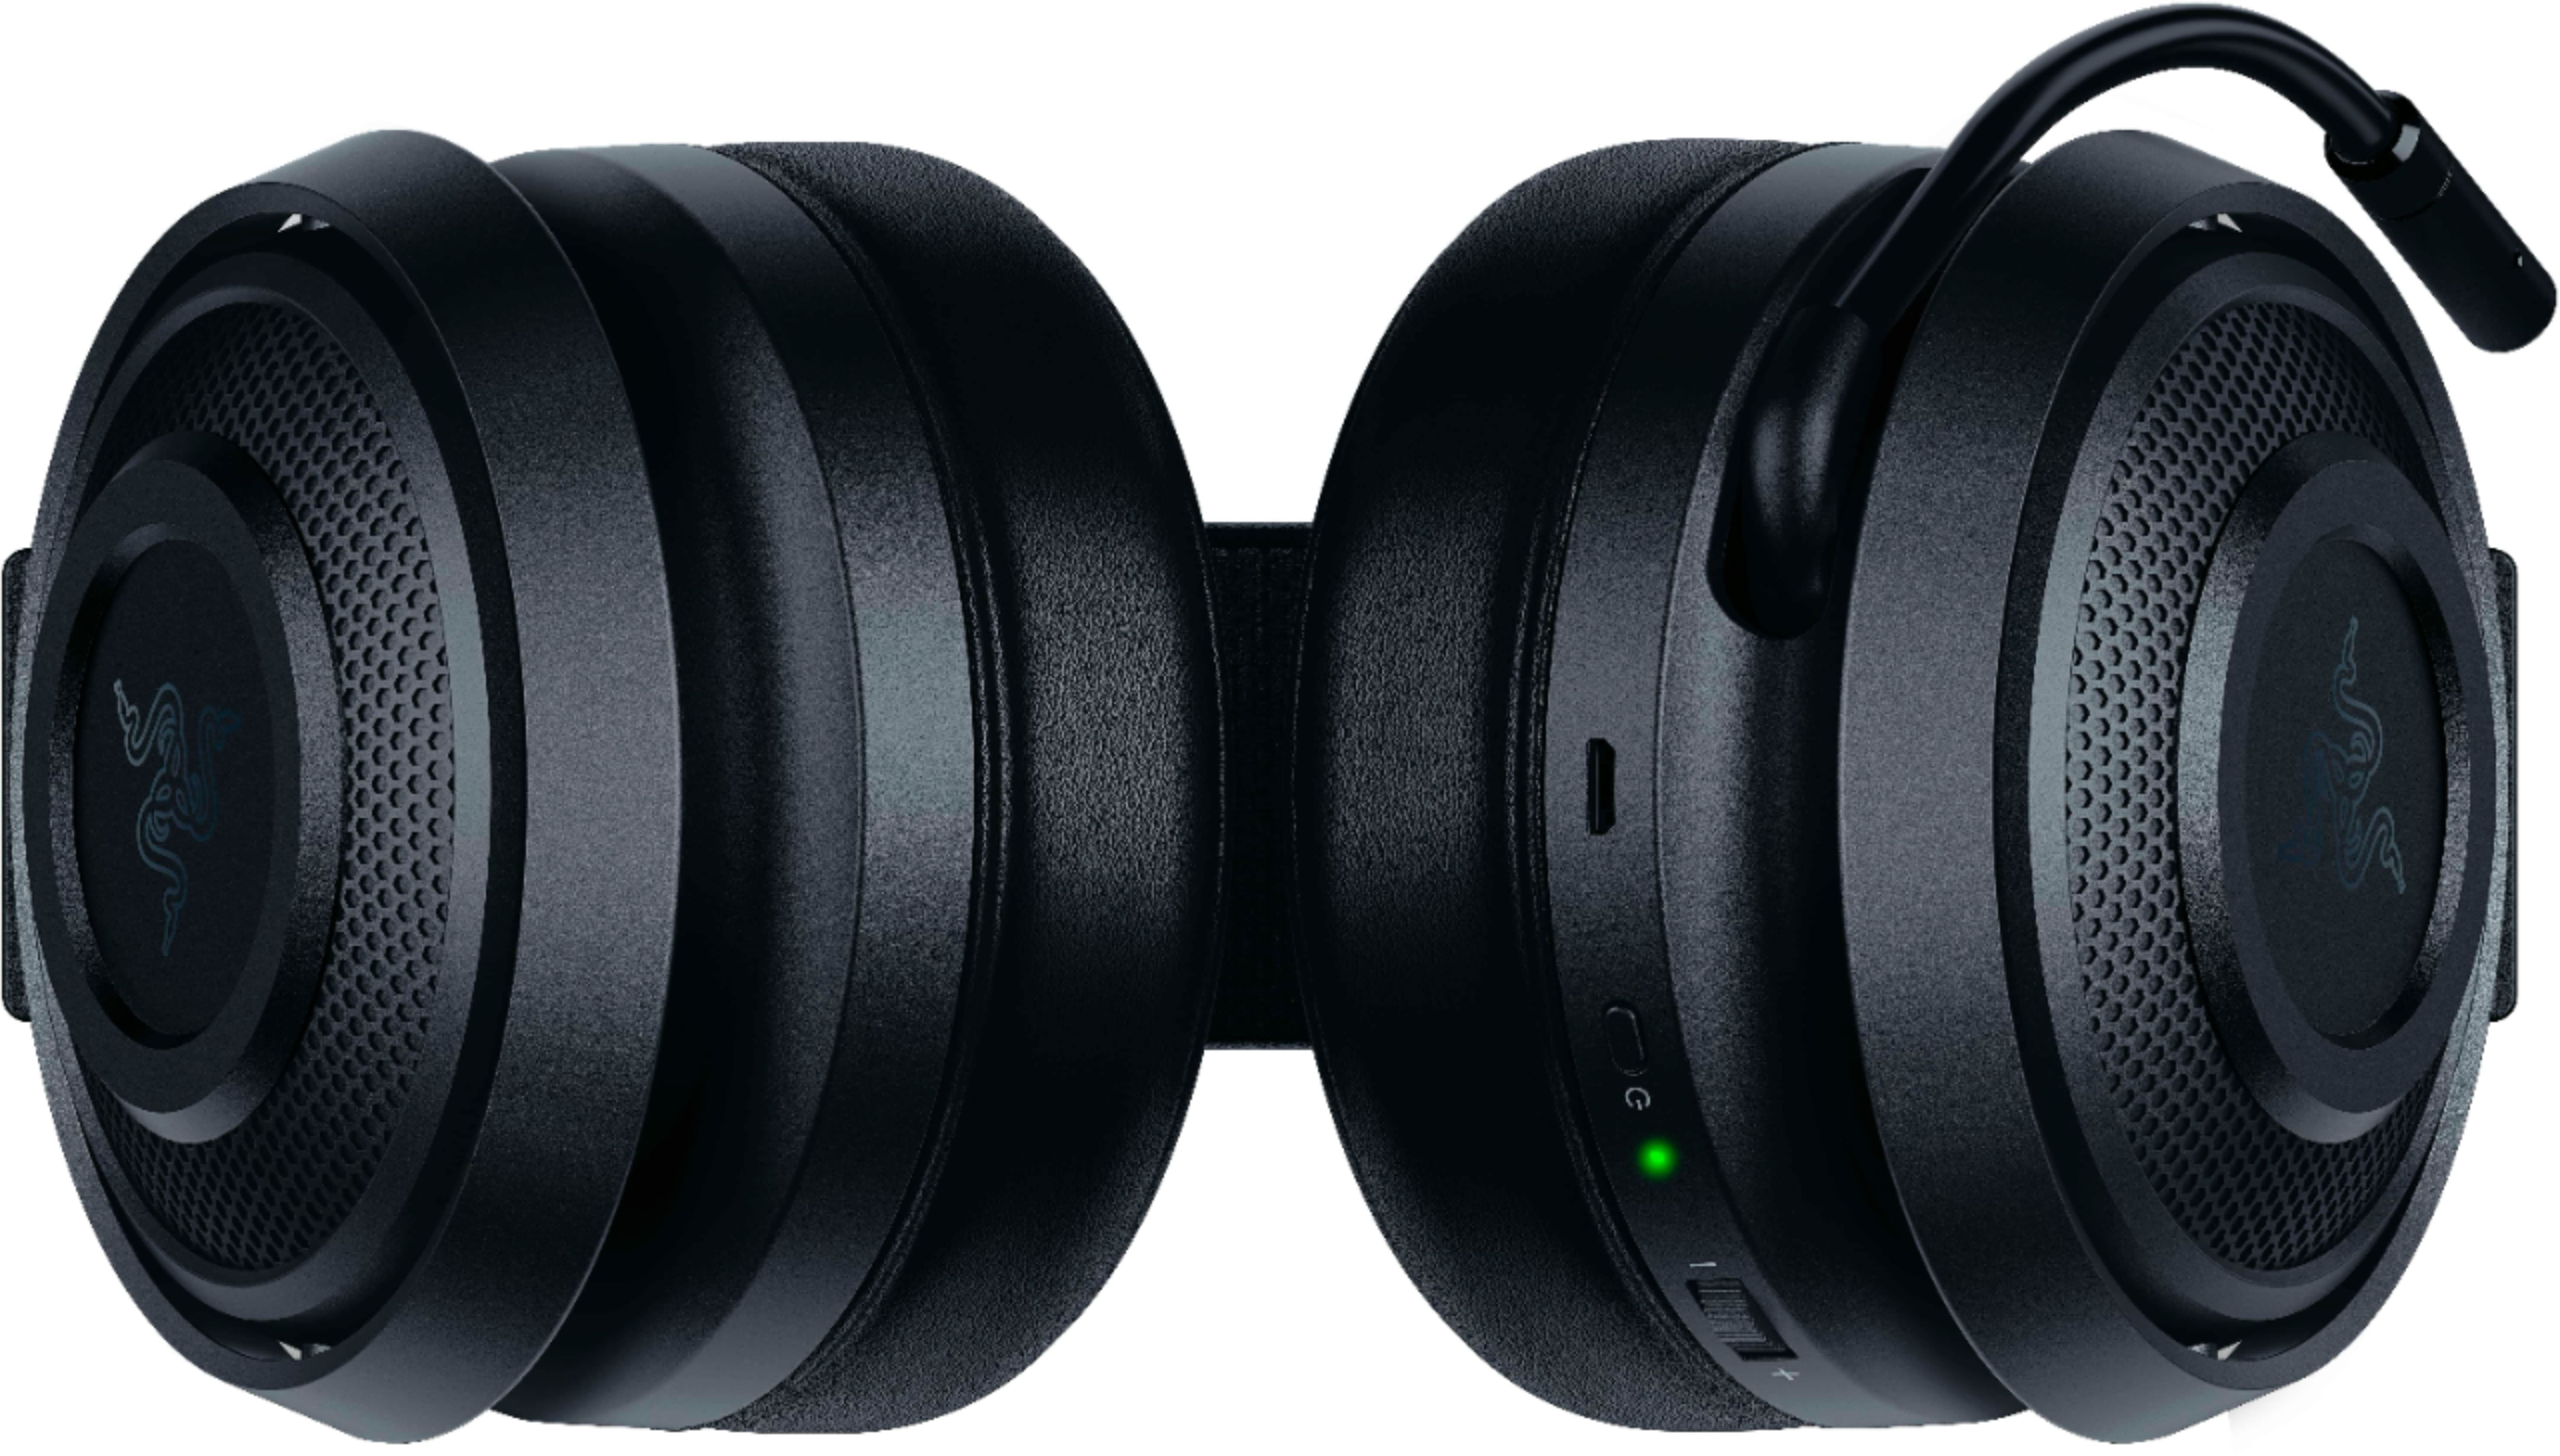 Razer Nari Essential Wireless Gaming Headset for PC, PS4 Black